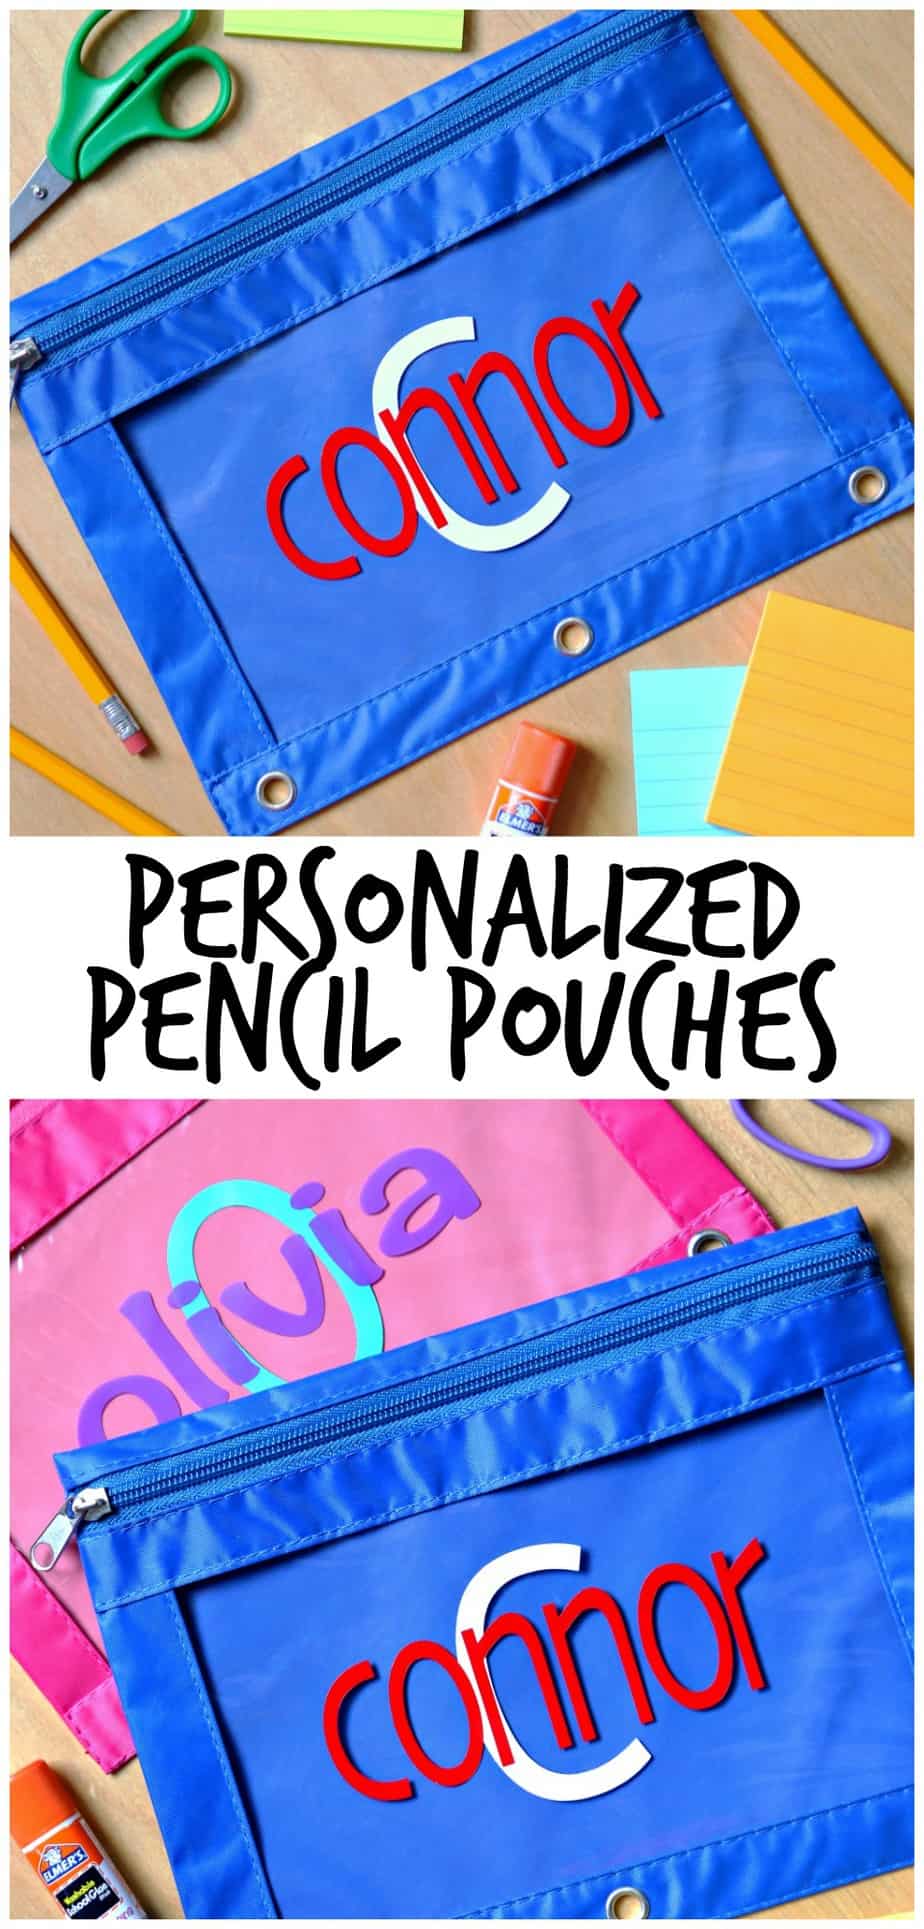 Personalized Pencil Pouches